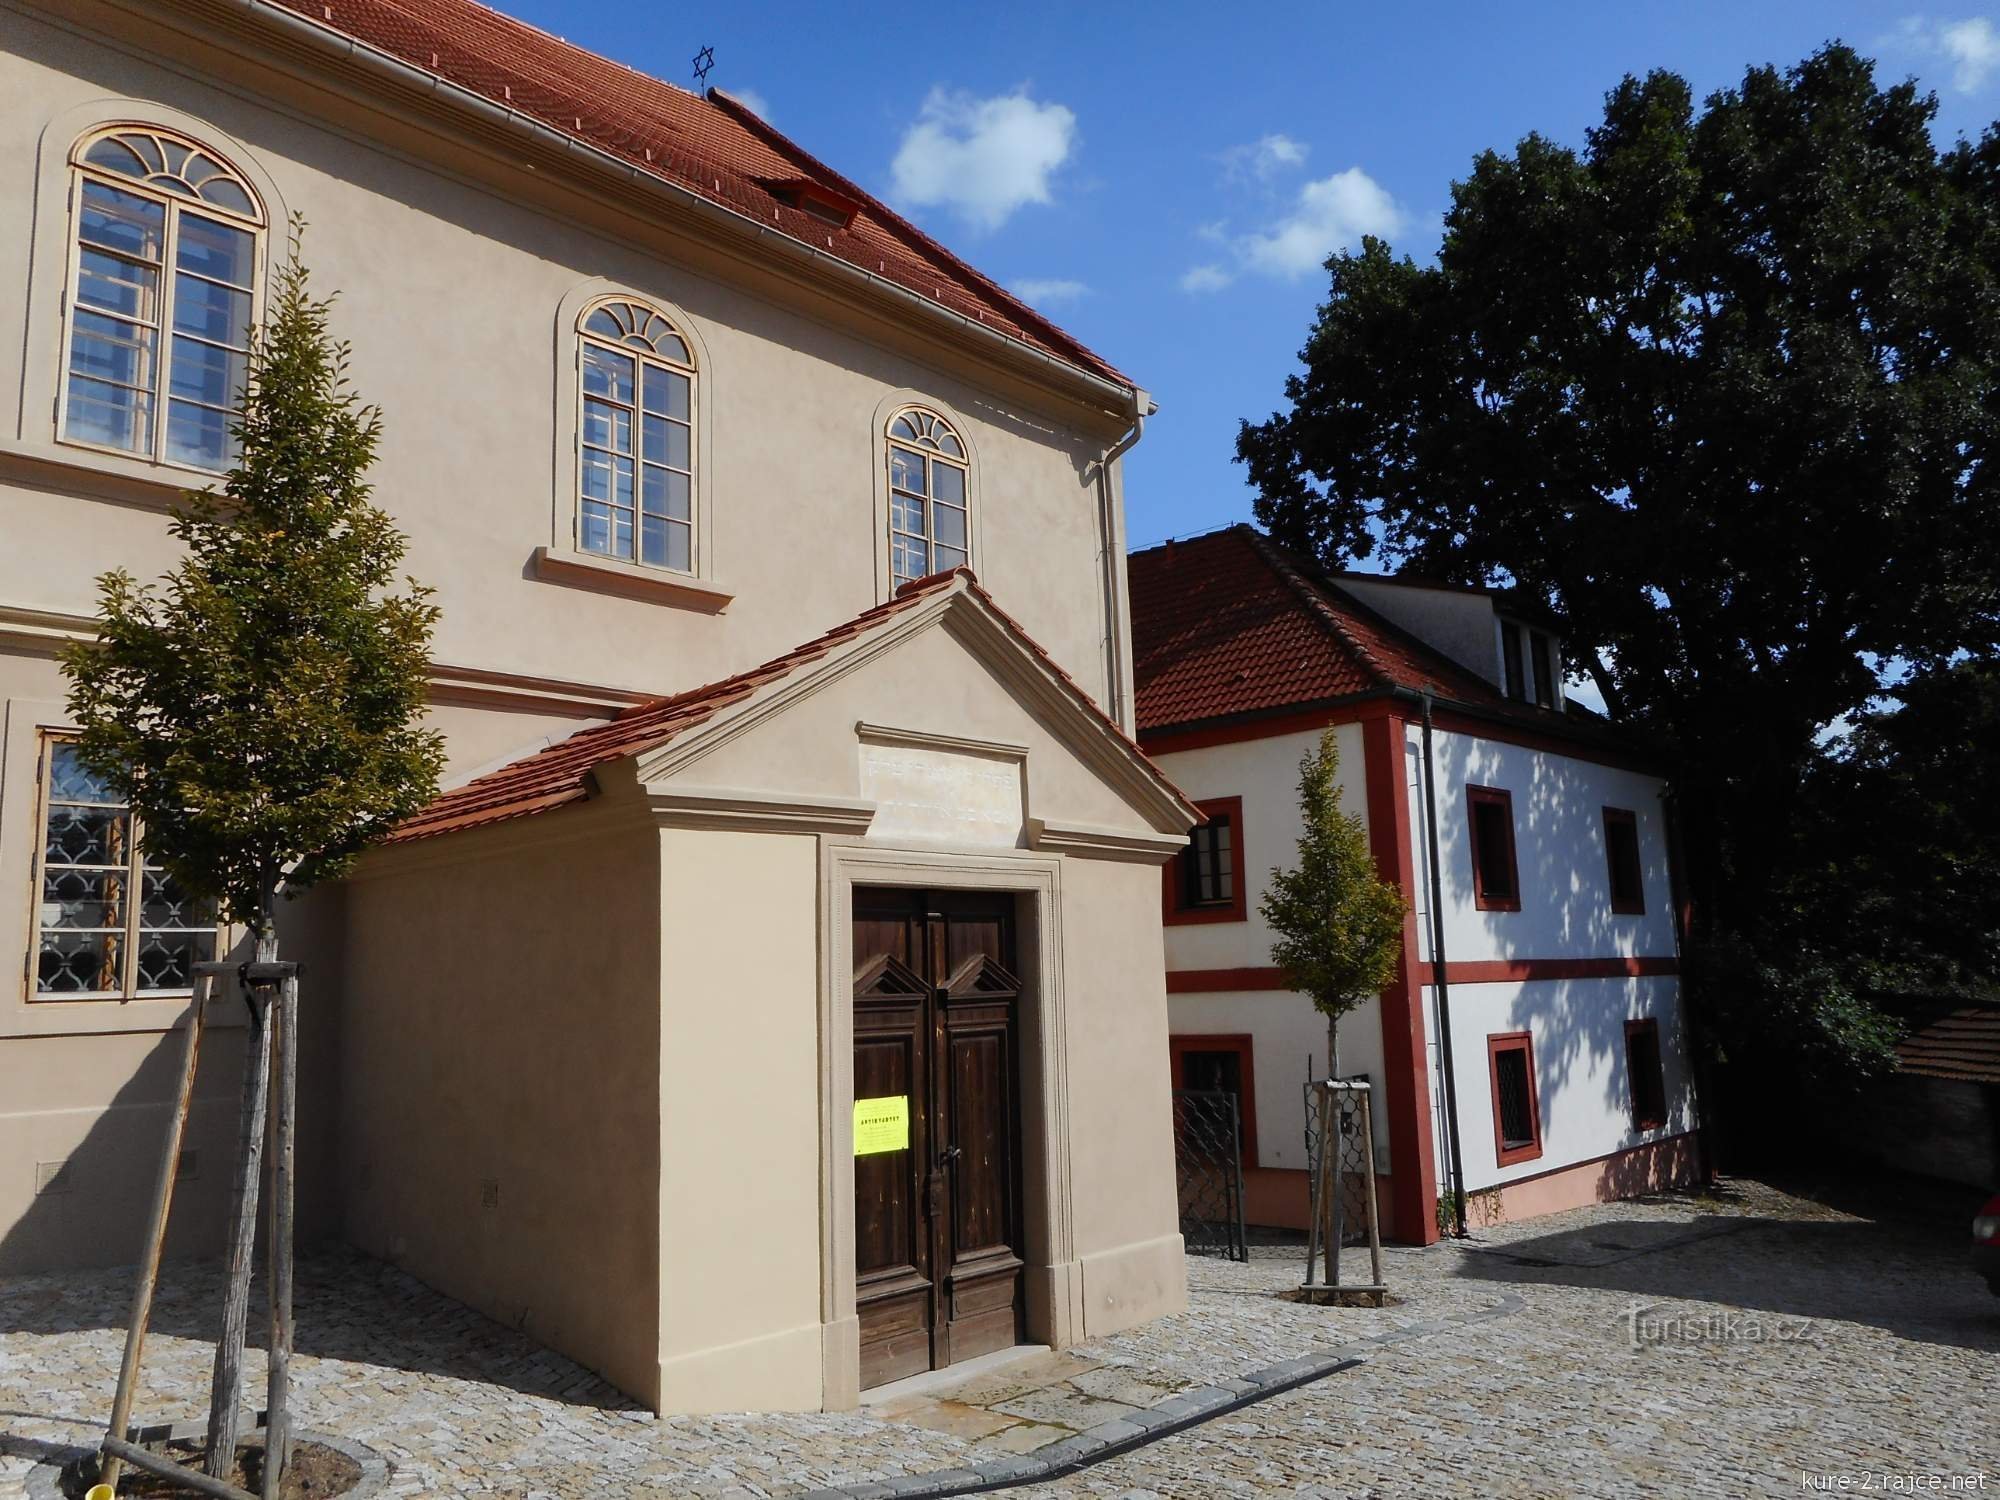 Astăzi, sinagoga servește ca un muzeu evreiesc